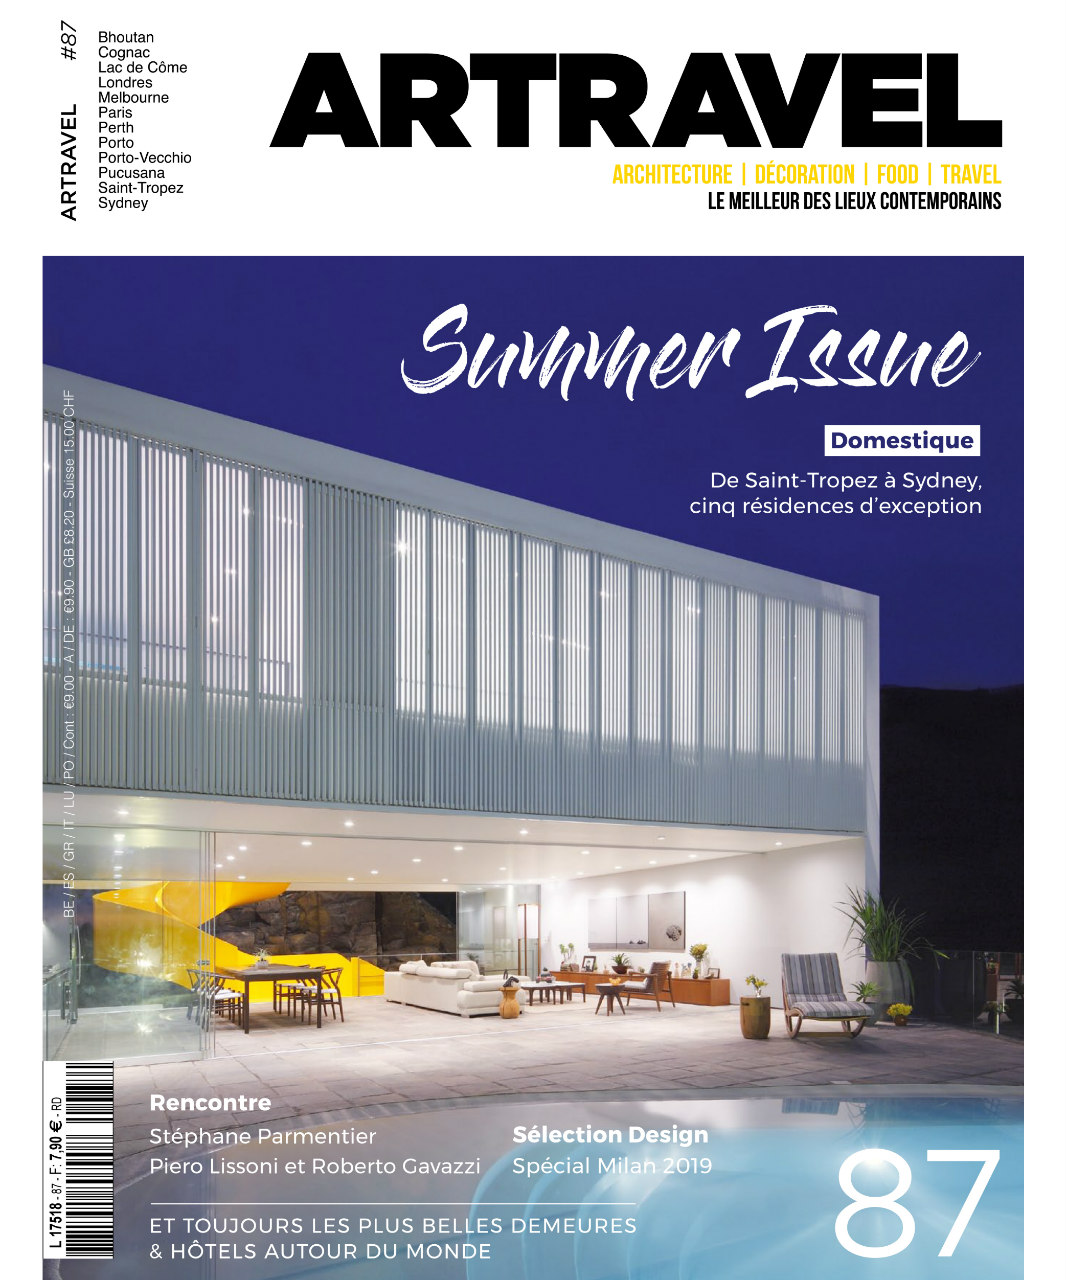 Art Travel France Magazine on Roscommon House